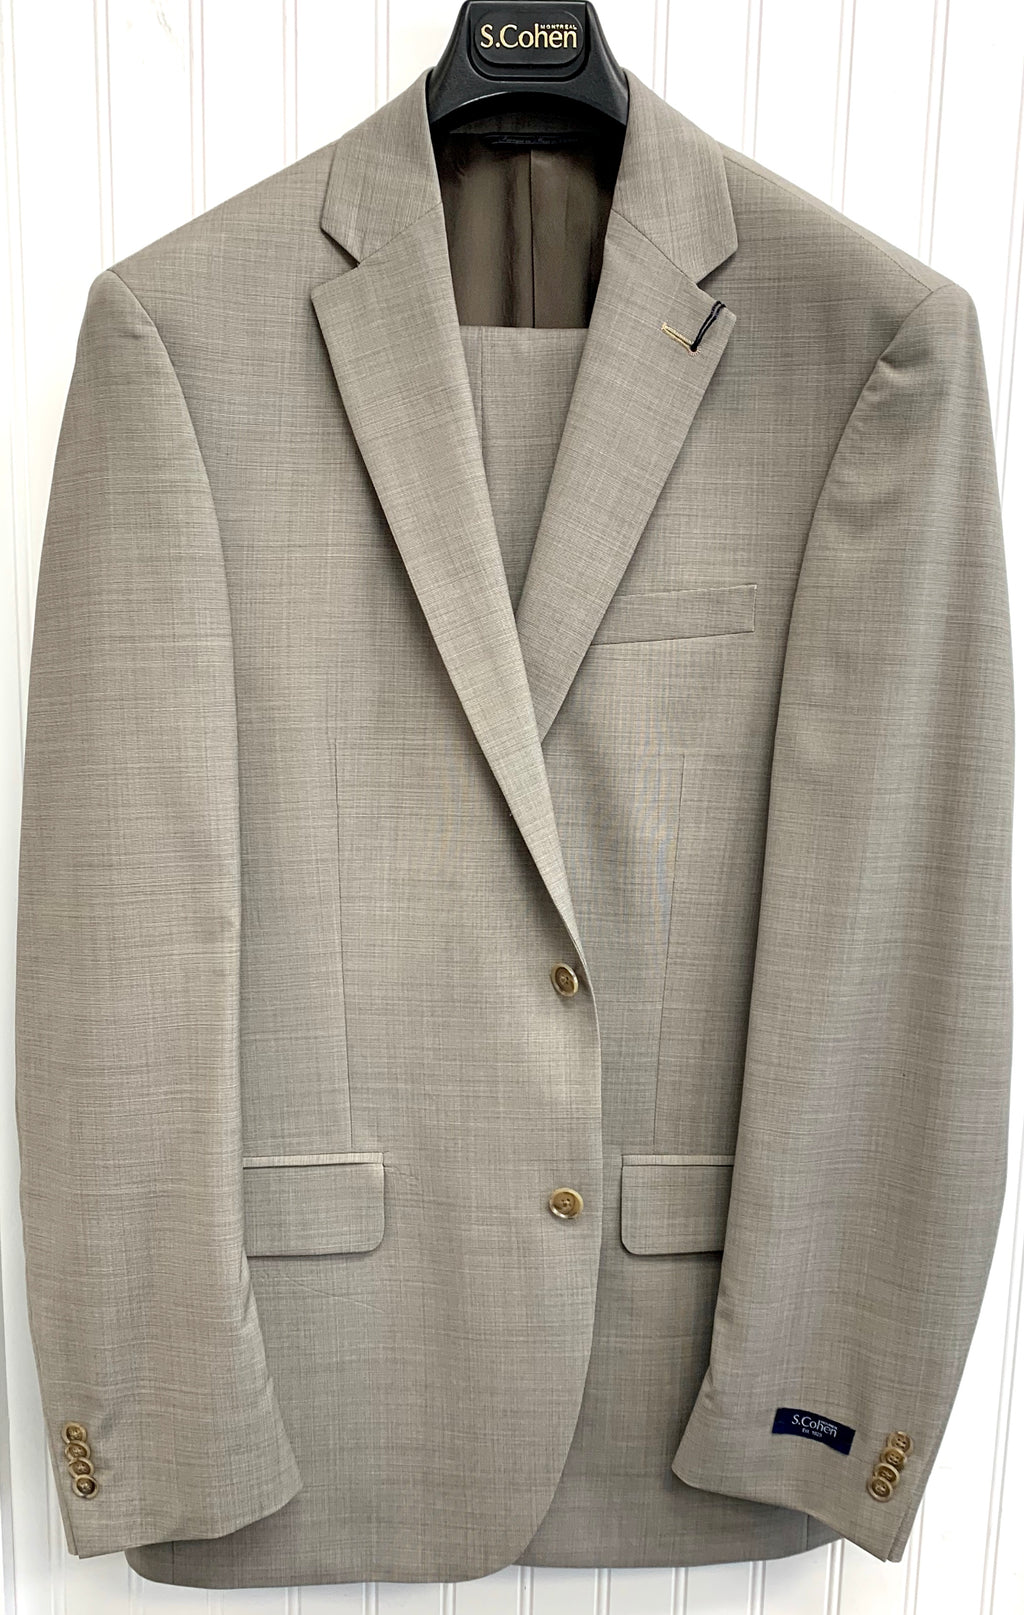 S. Cohen Prestige Wool Suit- 94-4254 (Beige)